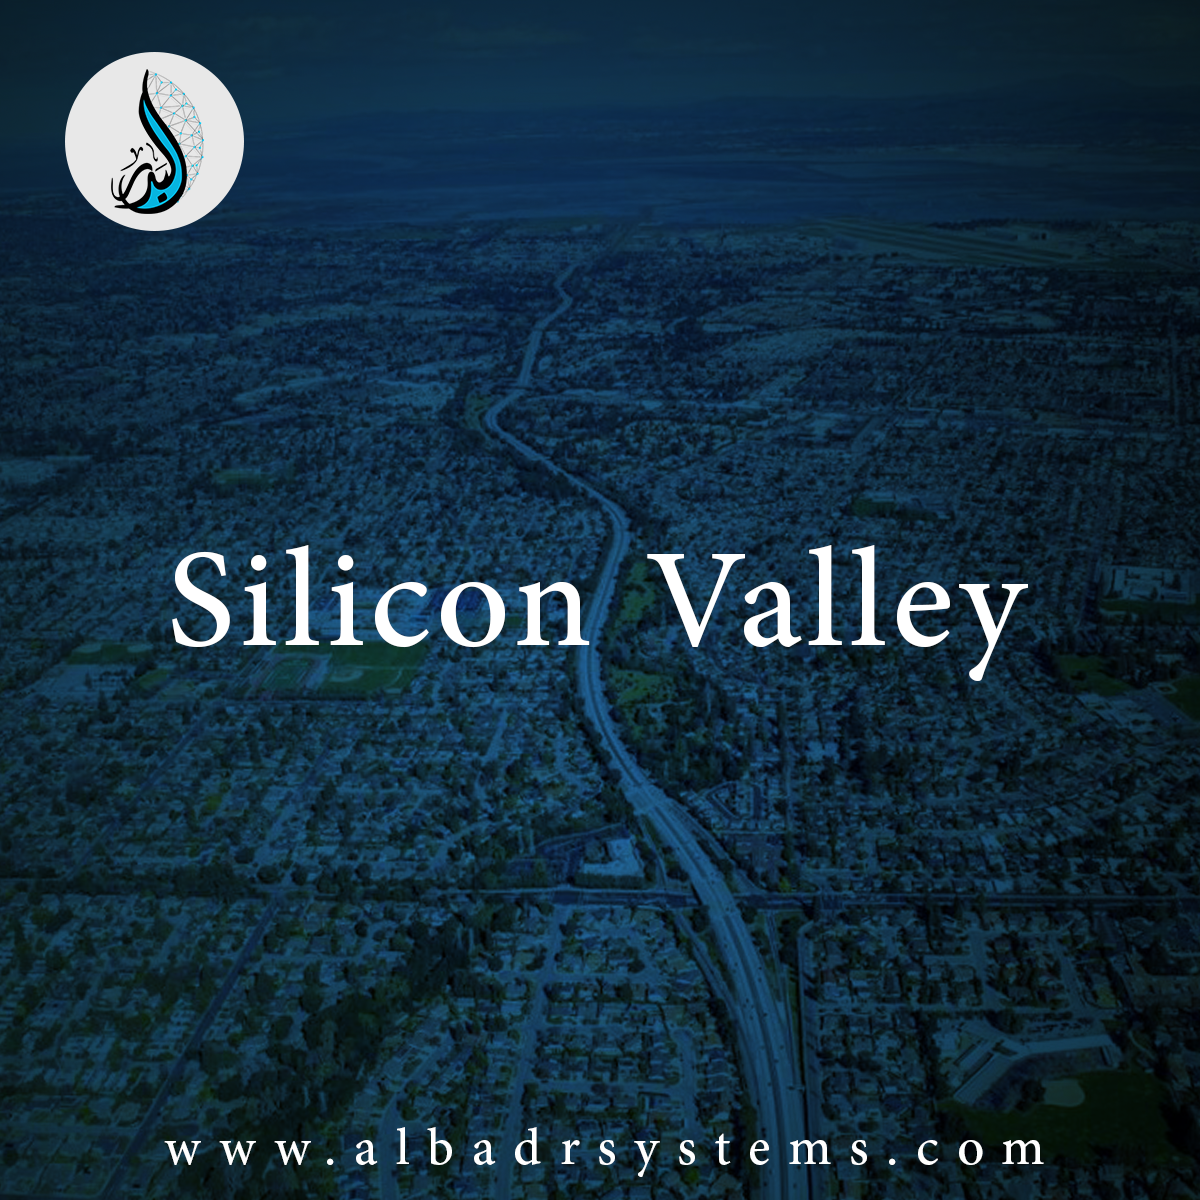 Al-Badr Smart Systems – البدر للنظم الذكيةThe Silicon Valley - Al-Badr  Smart Systems - البدر للنظم الذكية